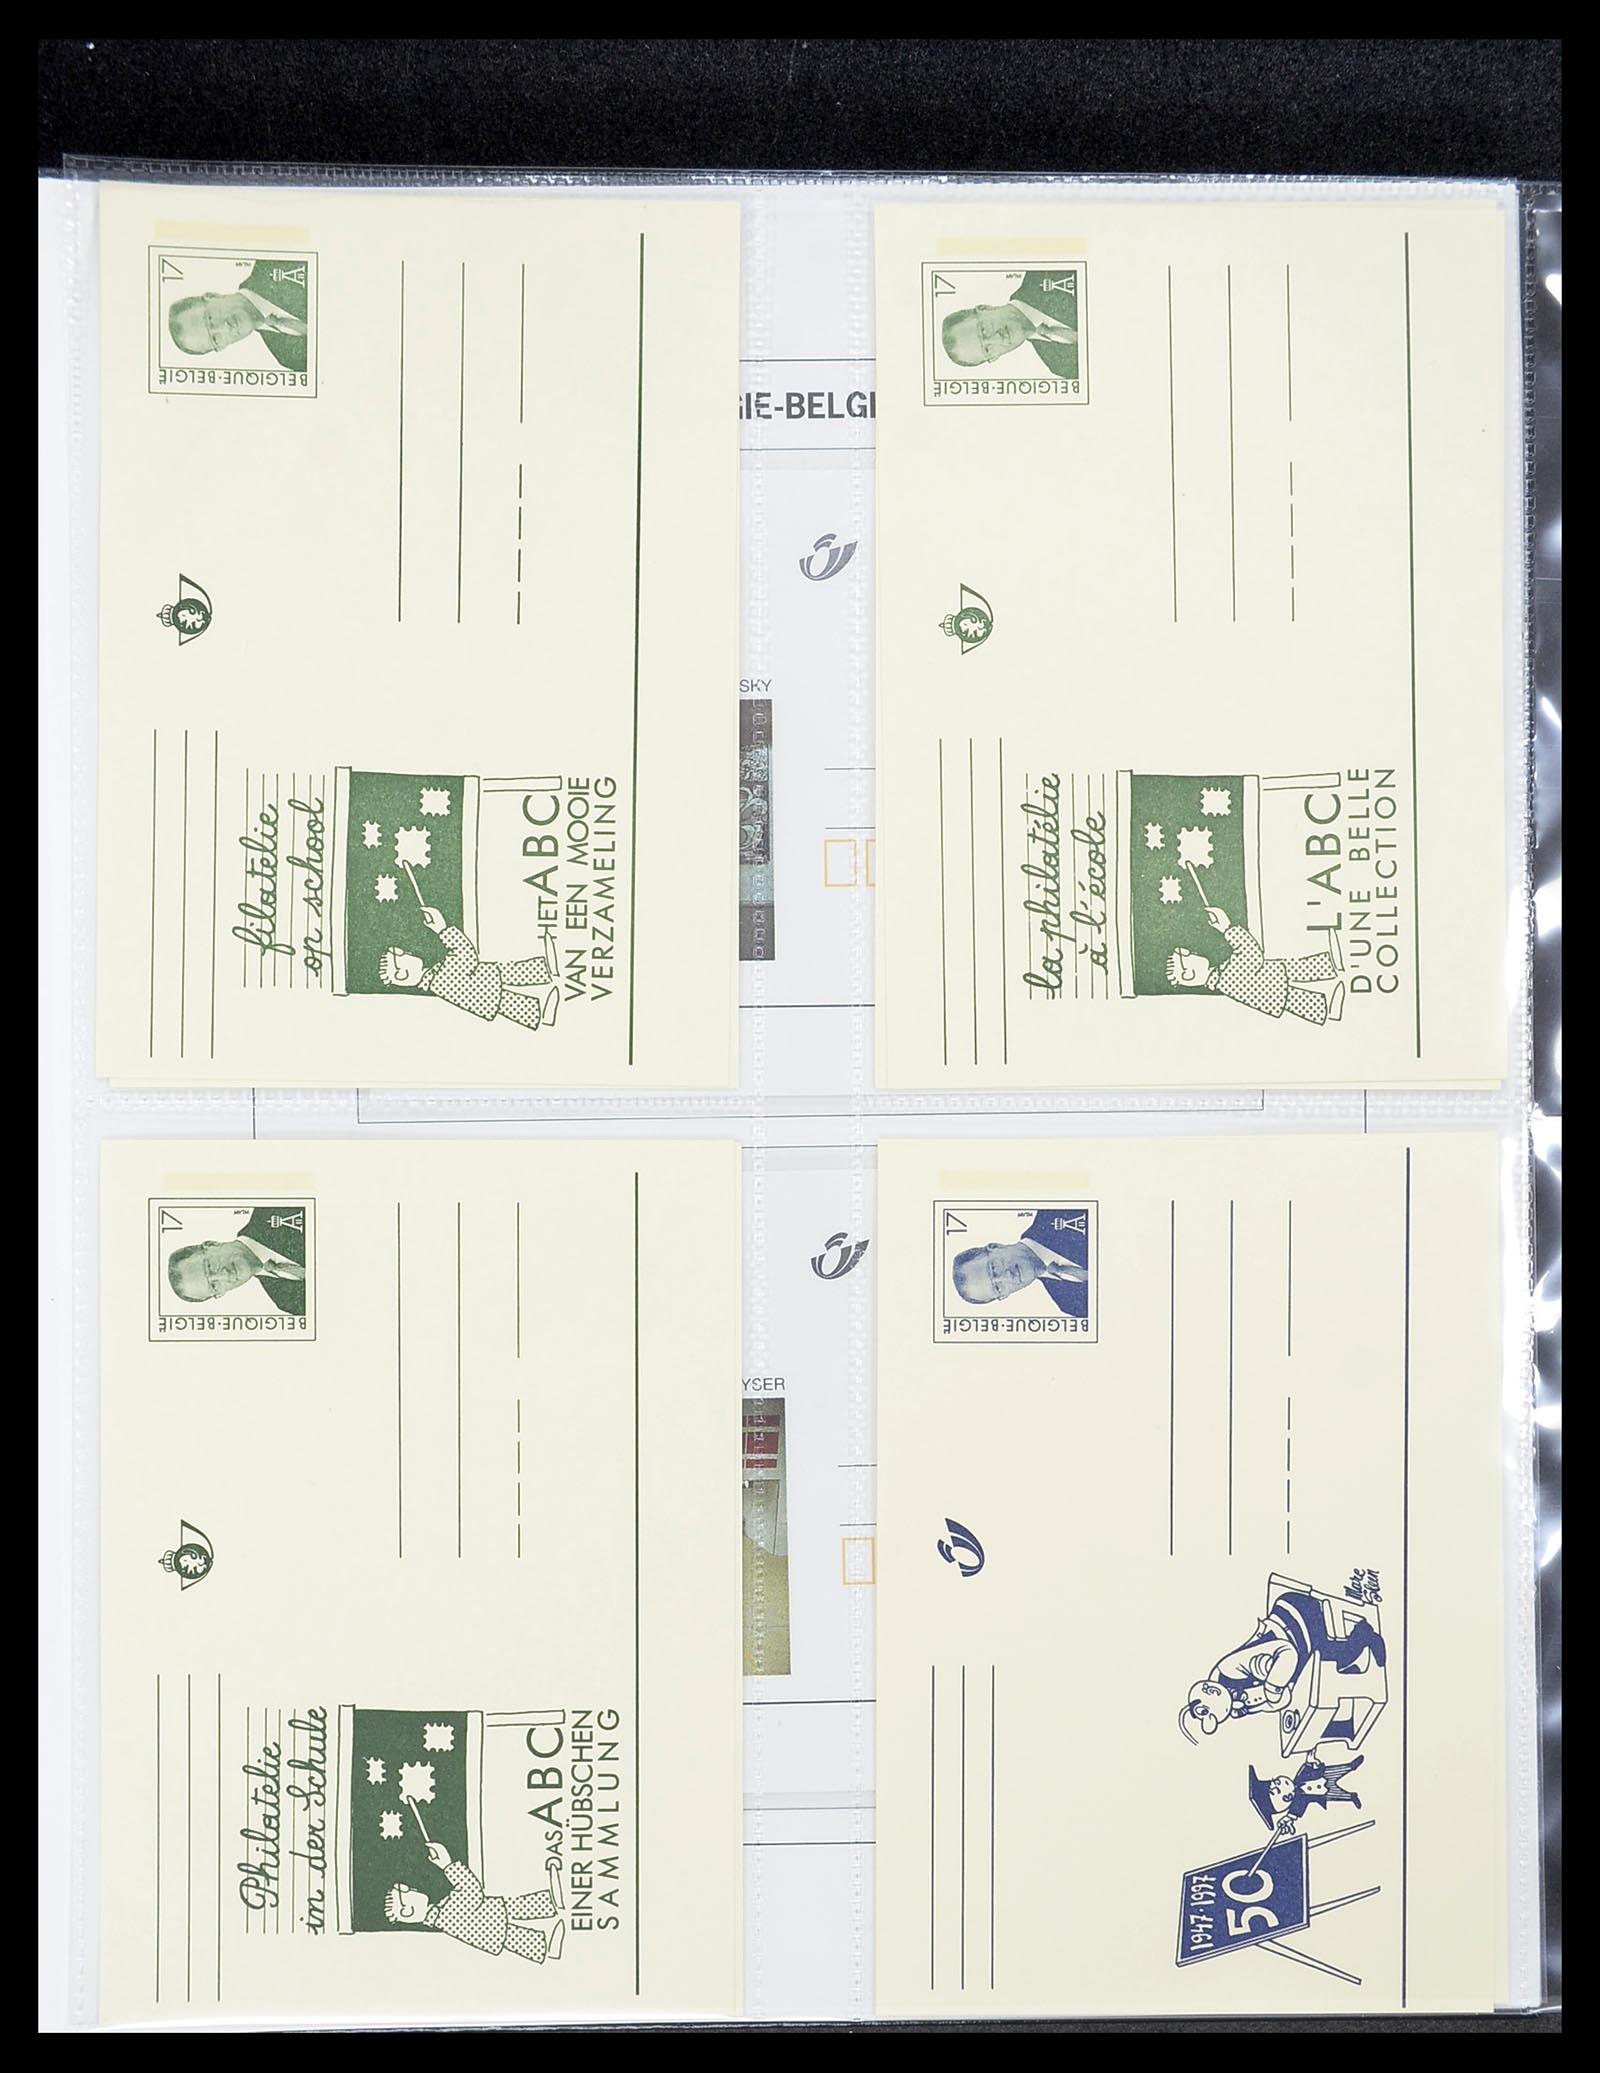 34639 044 - Stamp Collection 34639 Belgium postal cards 1971-2010.